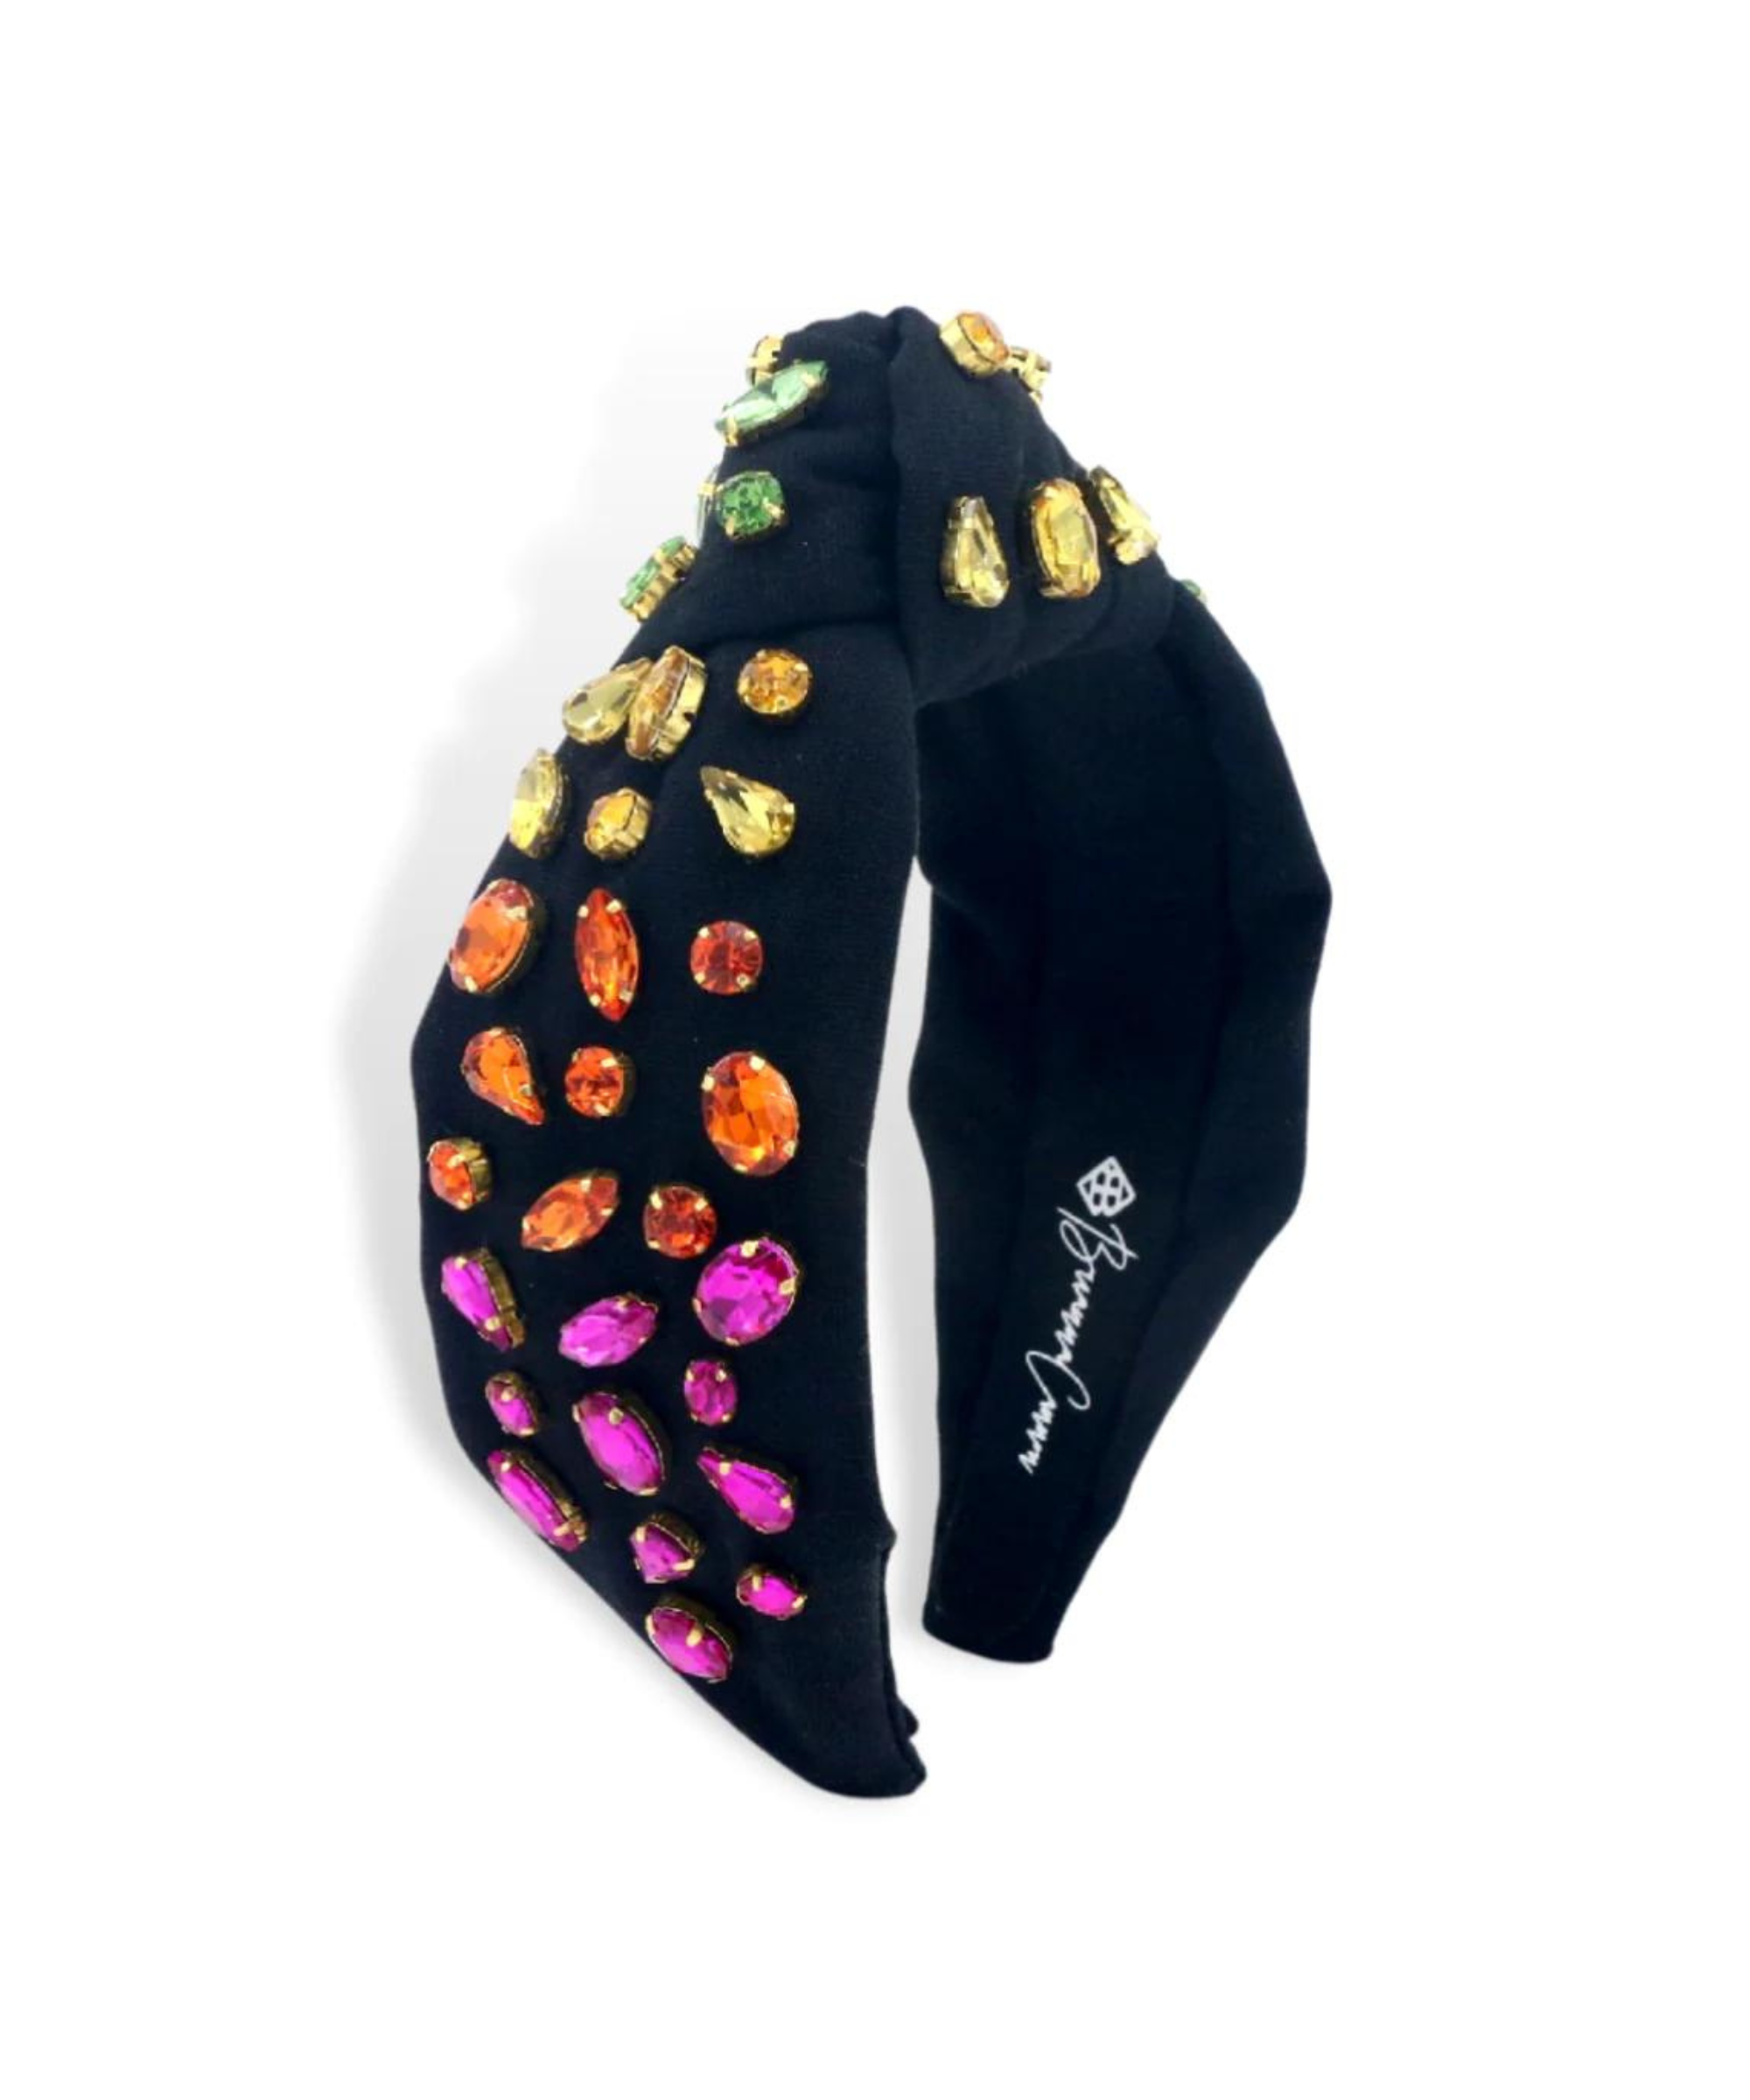 Black Headband with Rainbow Crystals